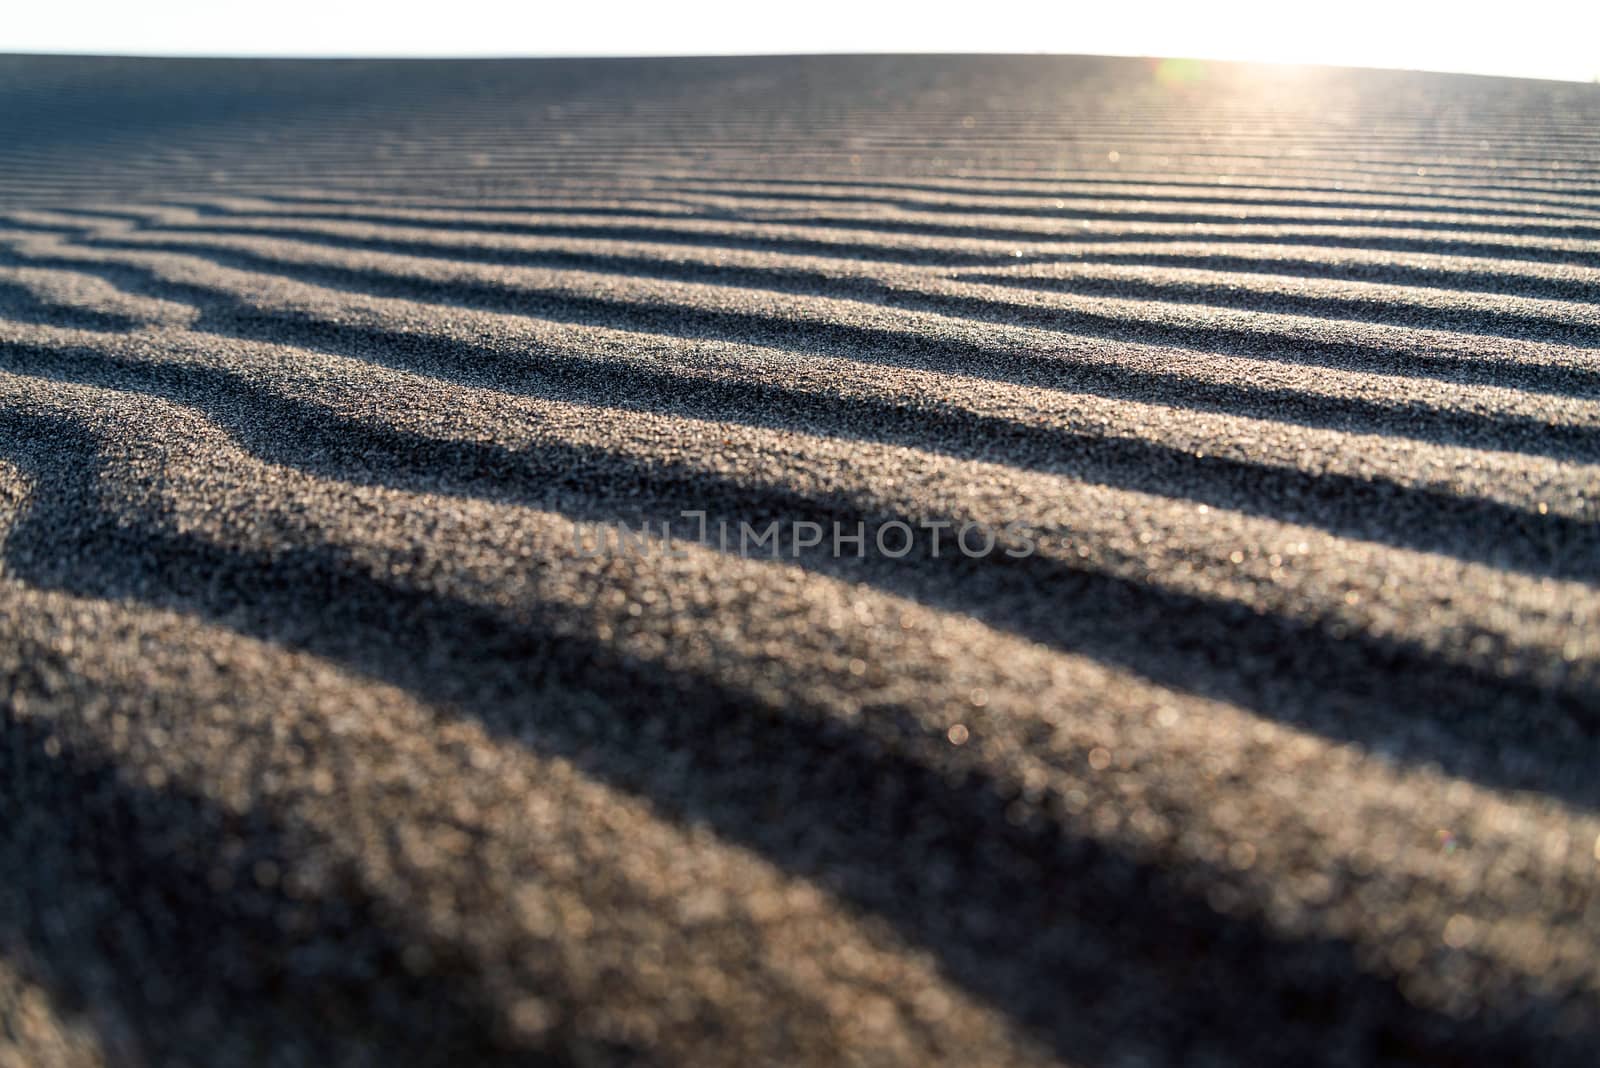 Sunset on the rolling sands of Bruneau Dunes, Idaho.